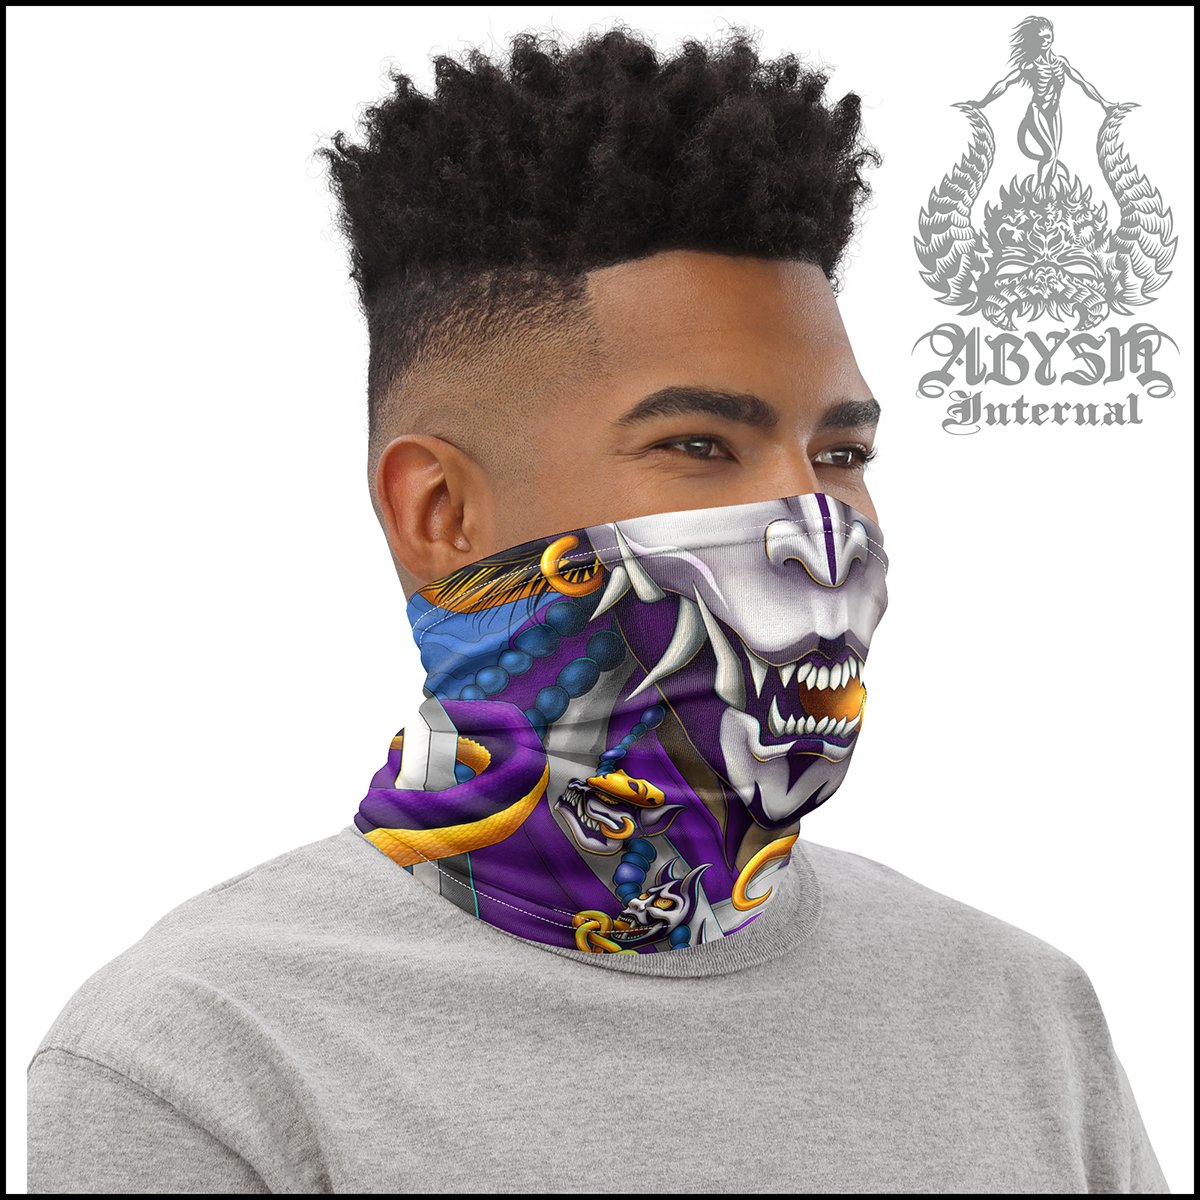 Hannya Neck Gaiter, Demon Face Mask, Japanese Oni Printed Head Covering, Graffiti Street Outfit, Snake, Fangs, Headband - Blue, Purple - Abysm Internal